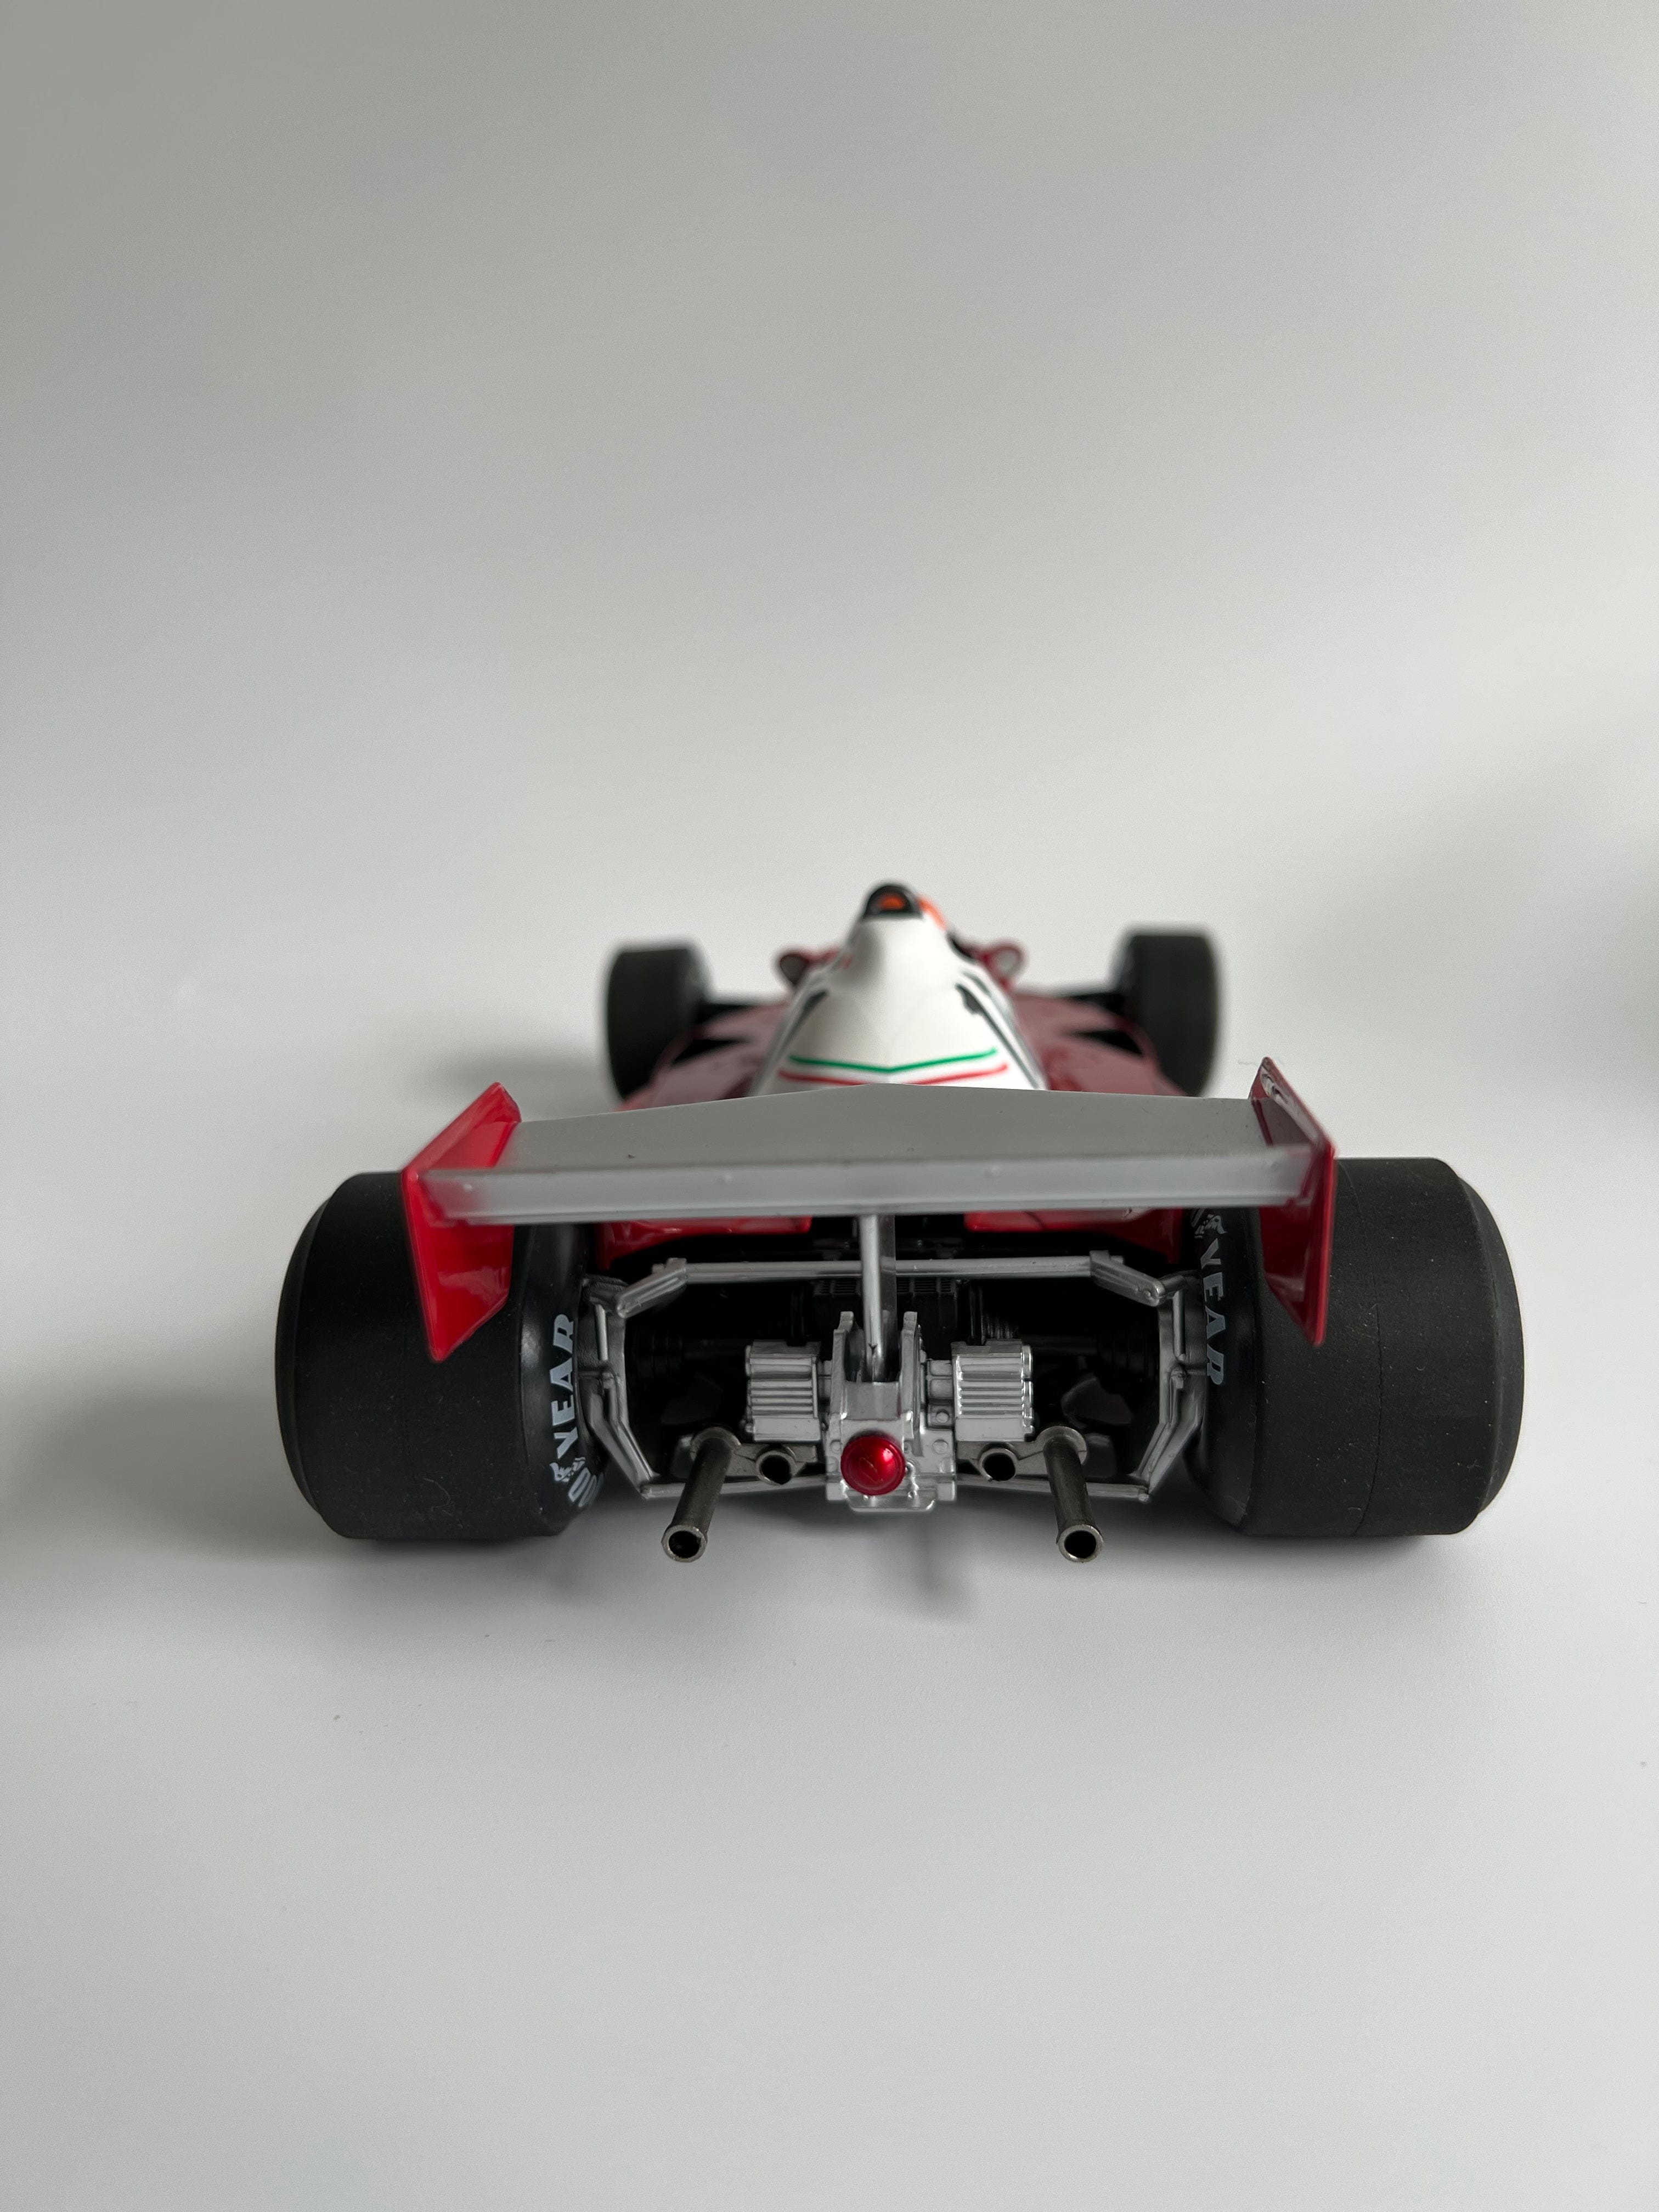 Niki Lauda Ferrari 312T2B #11 Winner Zandvoort formula 1 World Champion 1977 1:18 Model Car Group